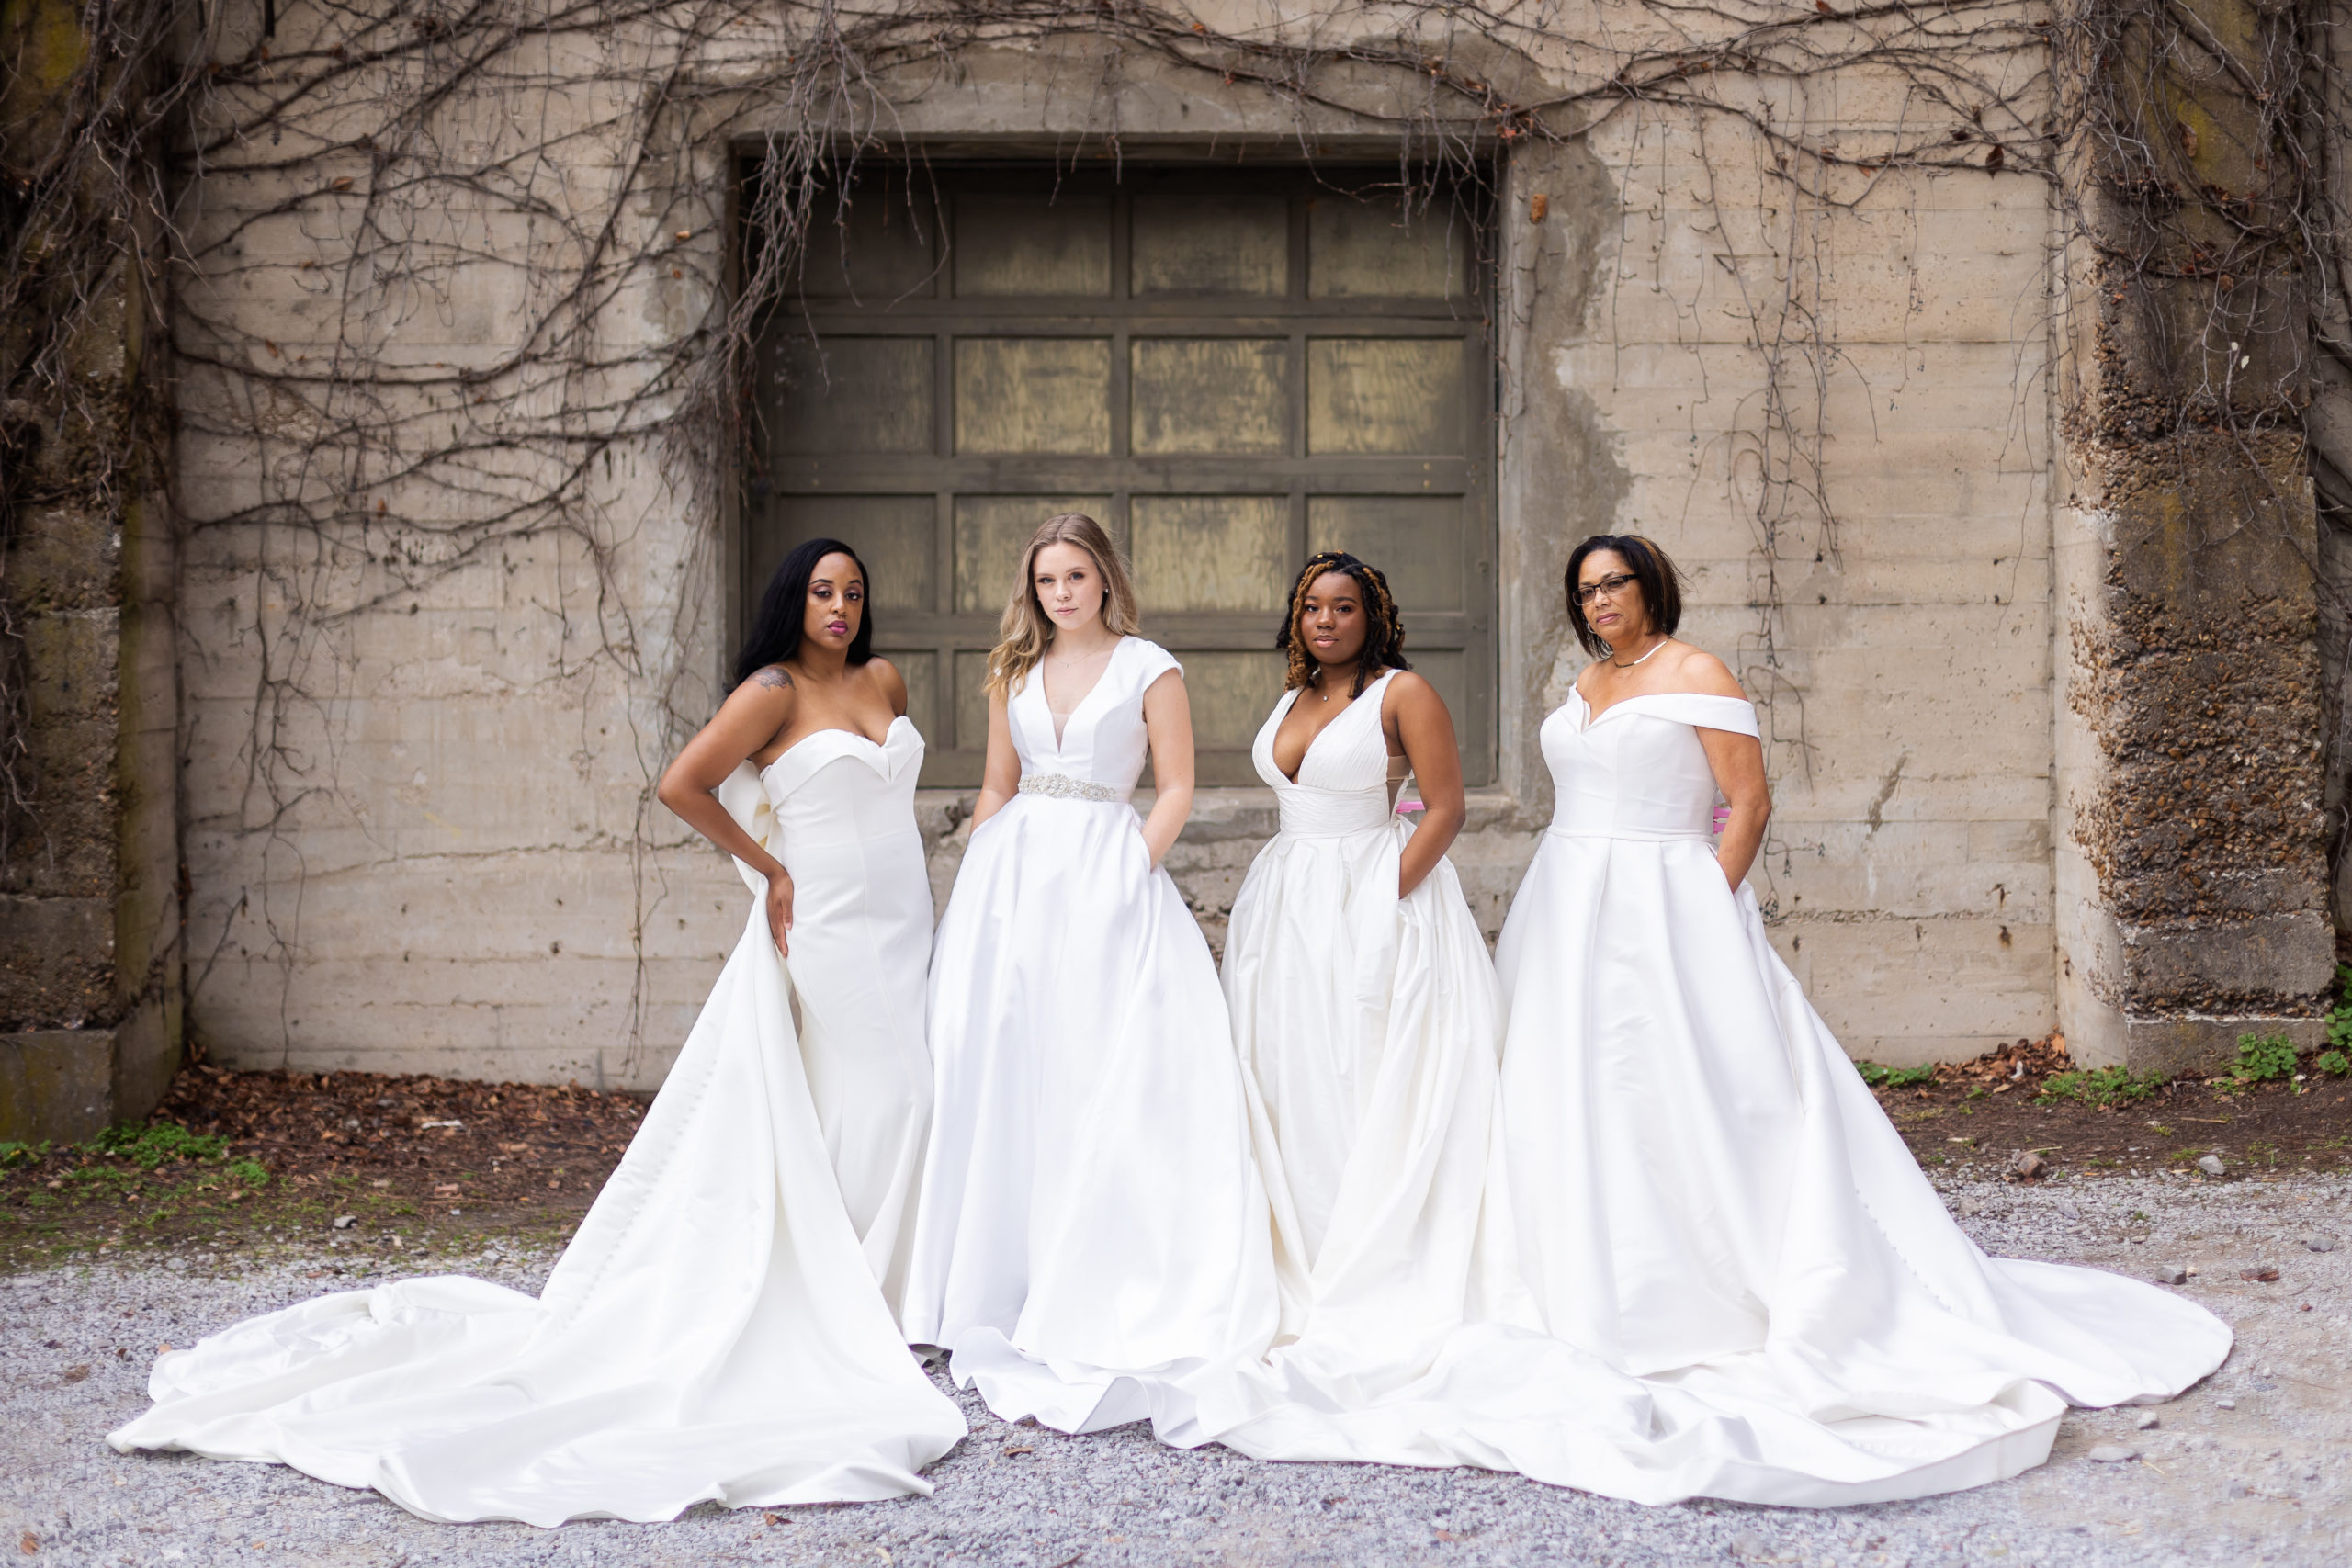 Four beautiful women modeling wedding gowns in Downtown Clarksville, TN.